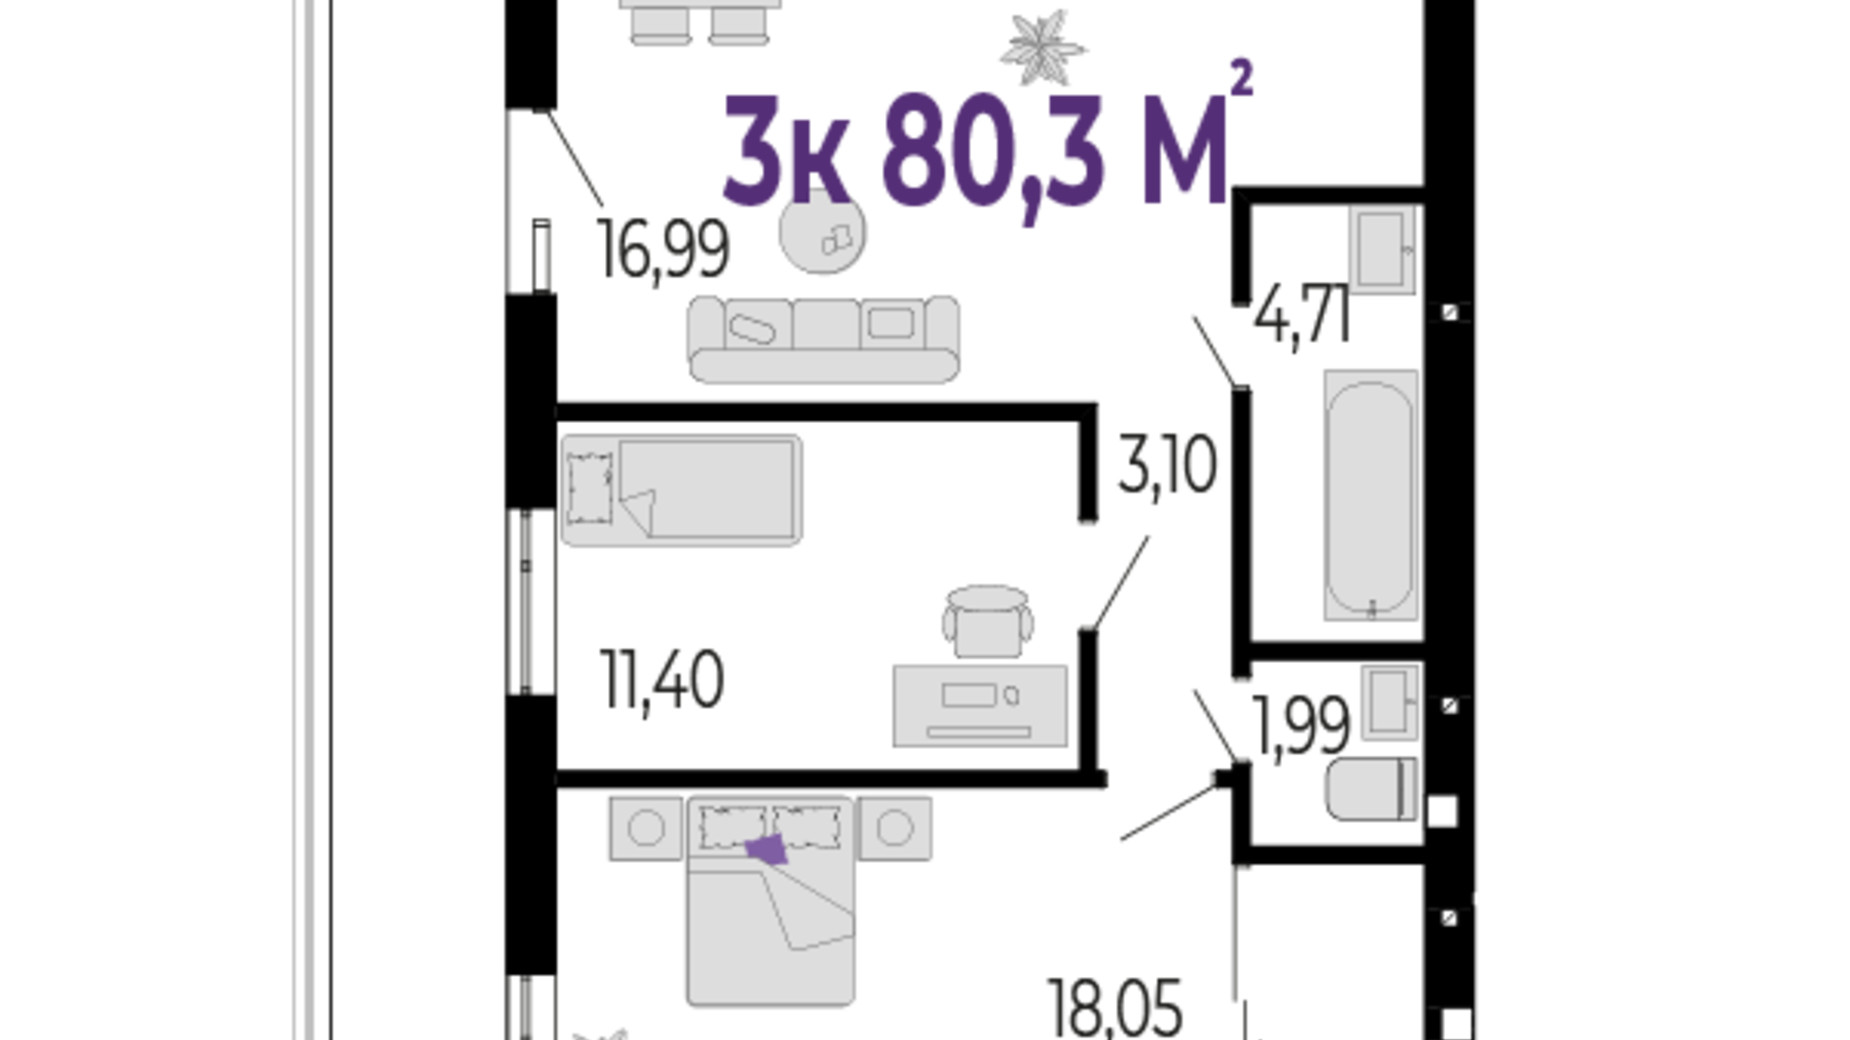 Планировка 3-комнатной квартиры в ЖК Долішній 80.3 м², фото 589537